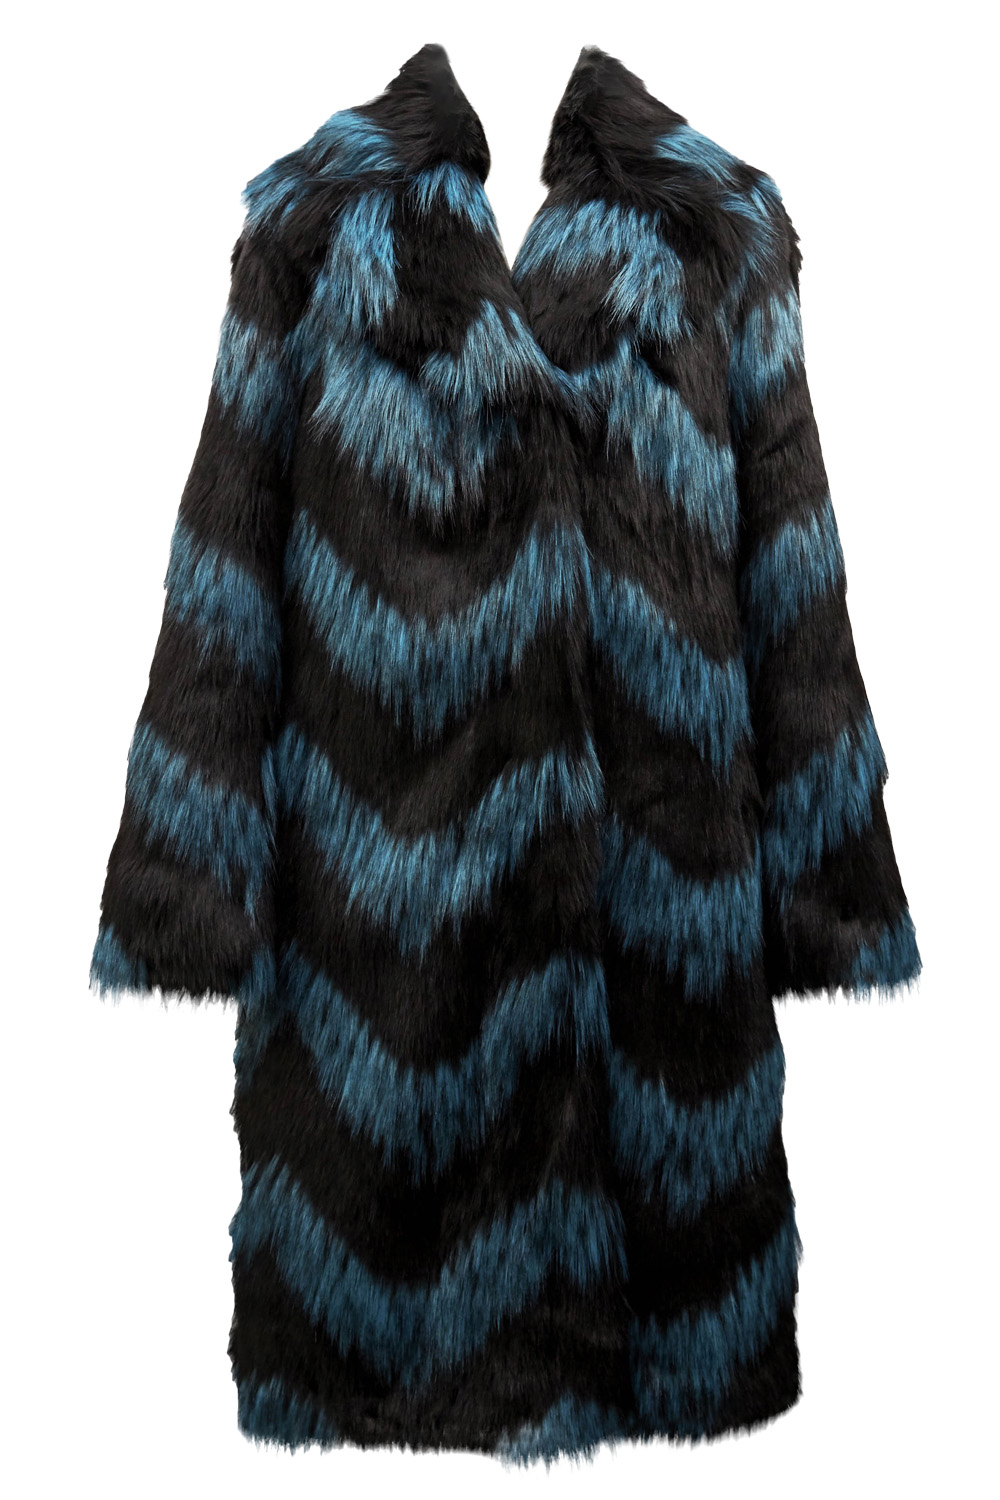 Coat, $459, by Trelise Cooper.